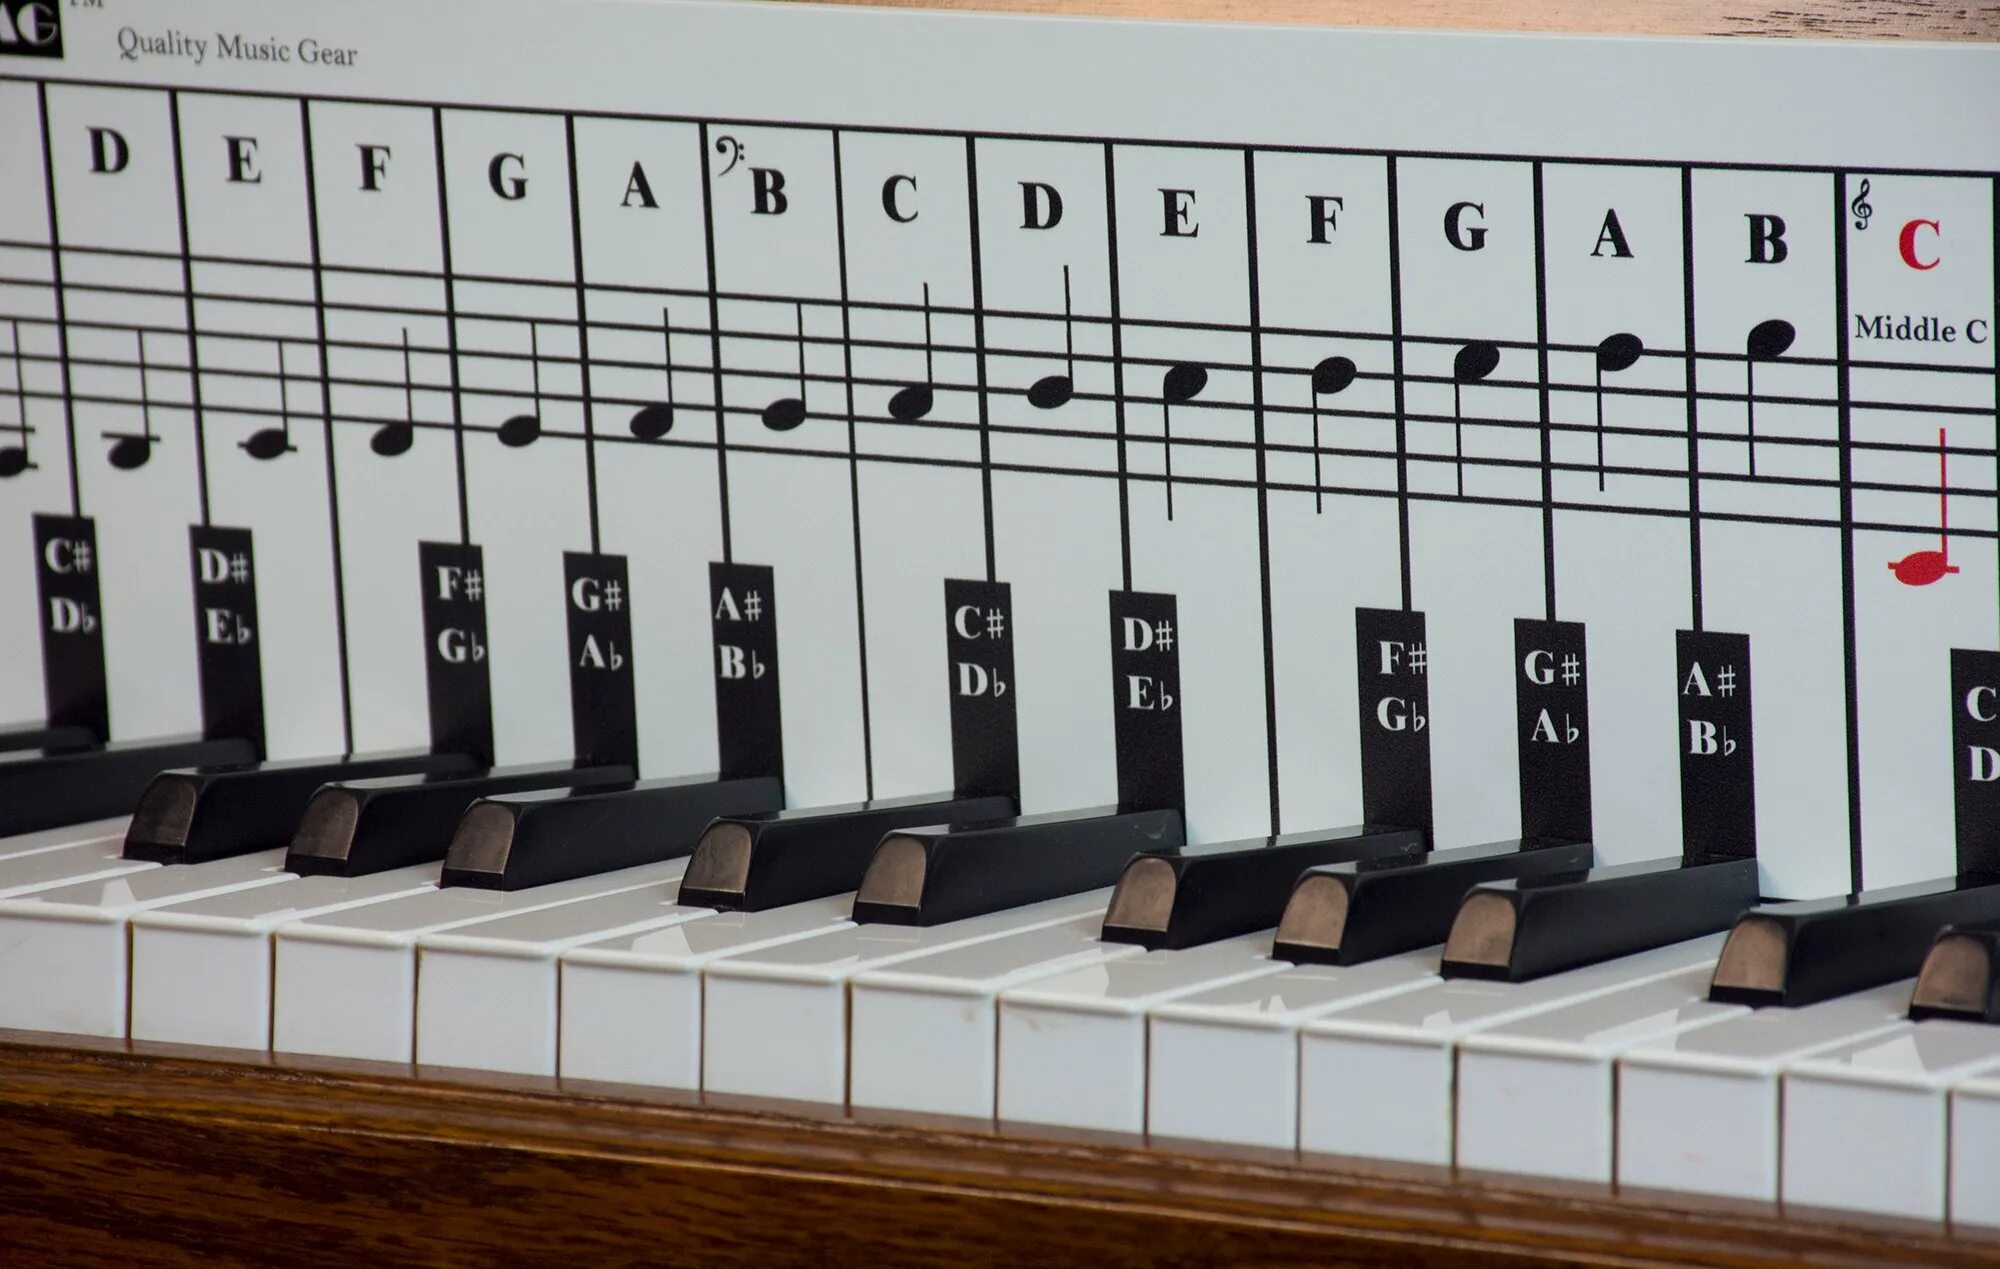 Пиано складная клавиатура. Клавиатура пианино. Фортепианная клавиатура. Клавиши фортепиано. Dilwe musical scale cat